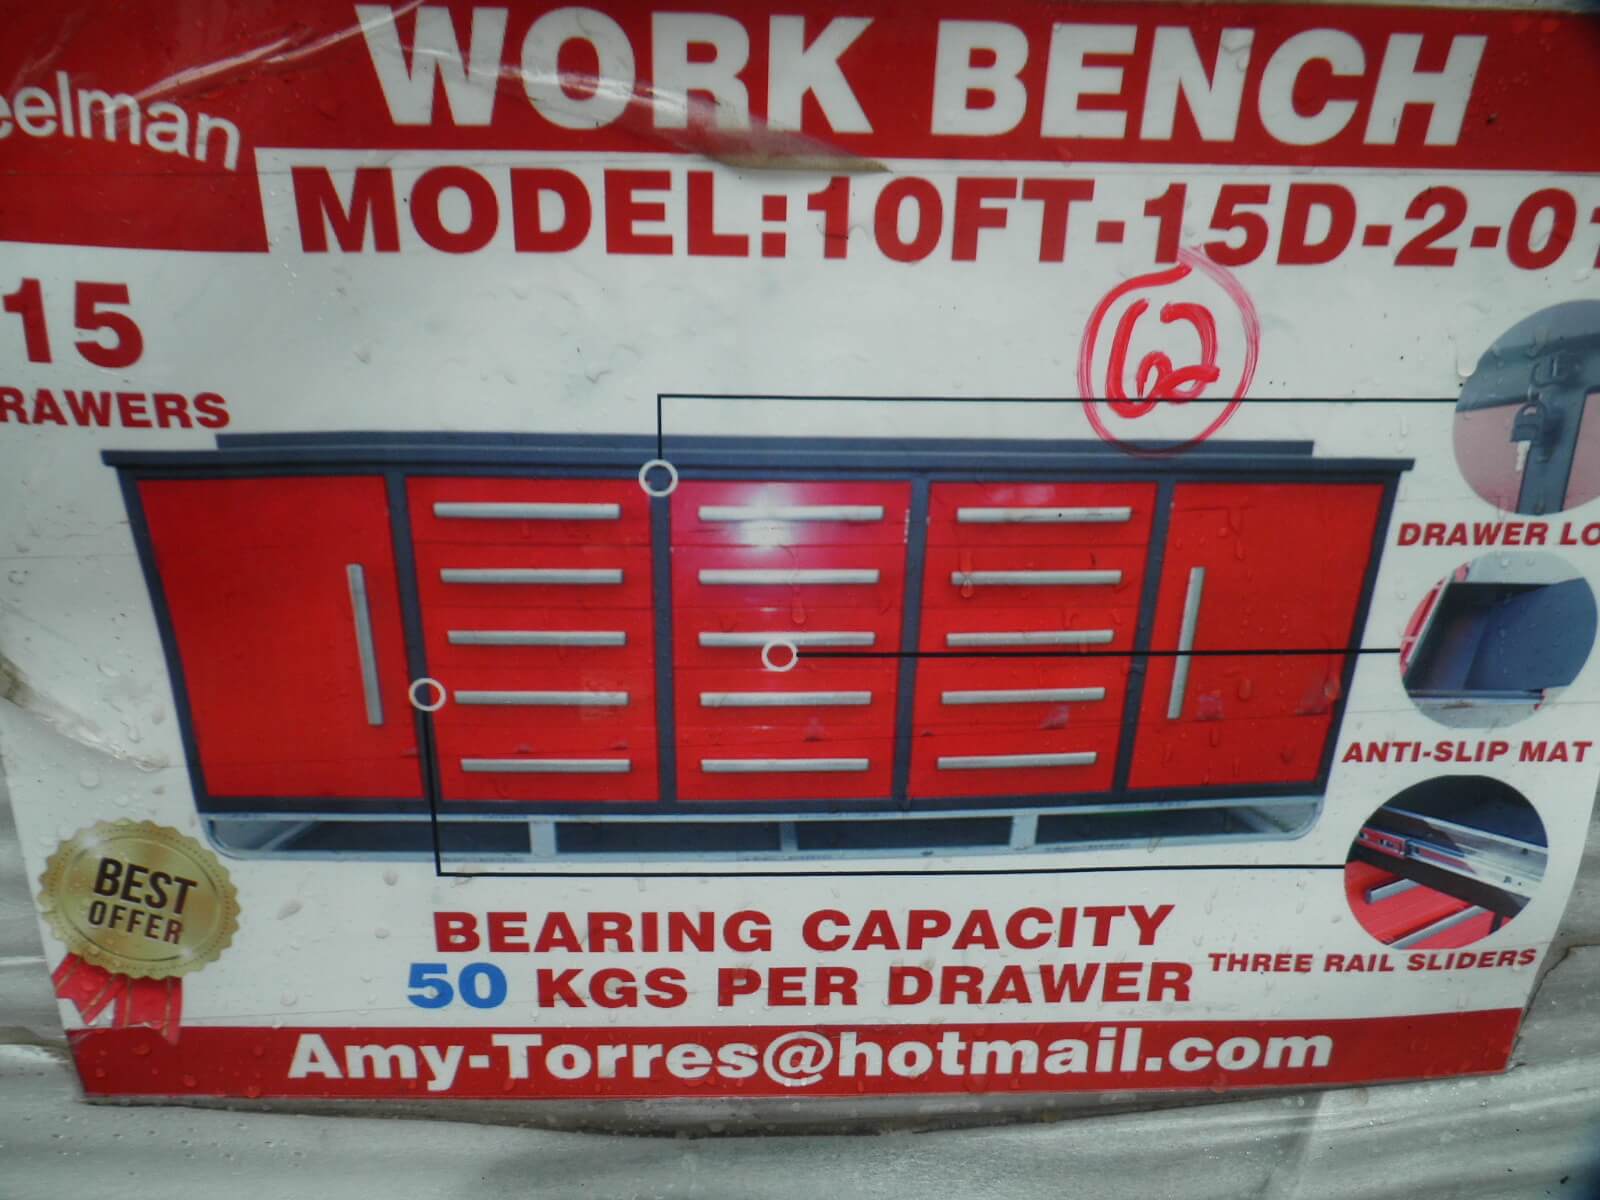 new Steelman 10ft. 15 drawer work bench-image